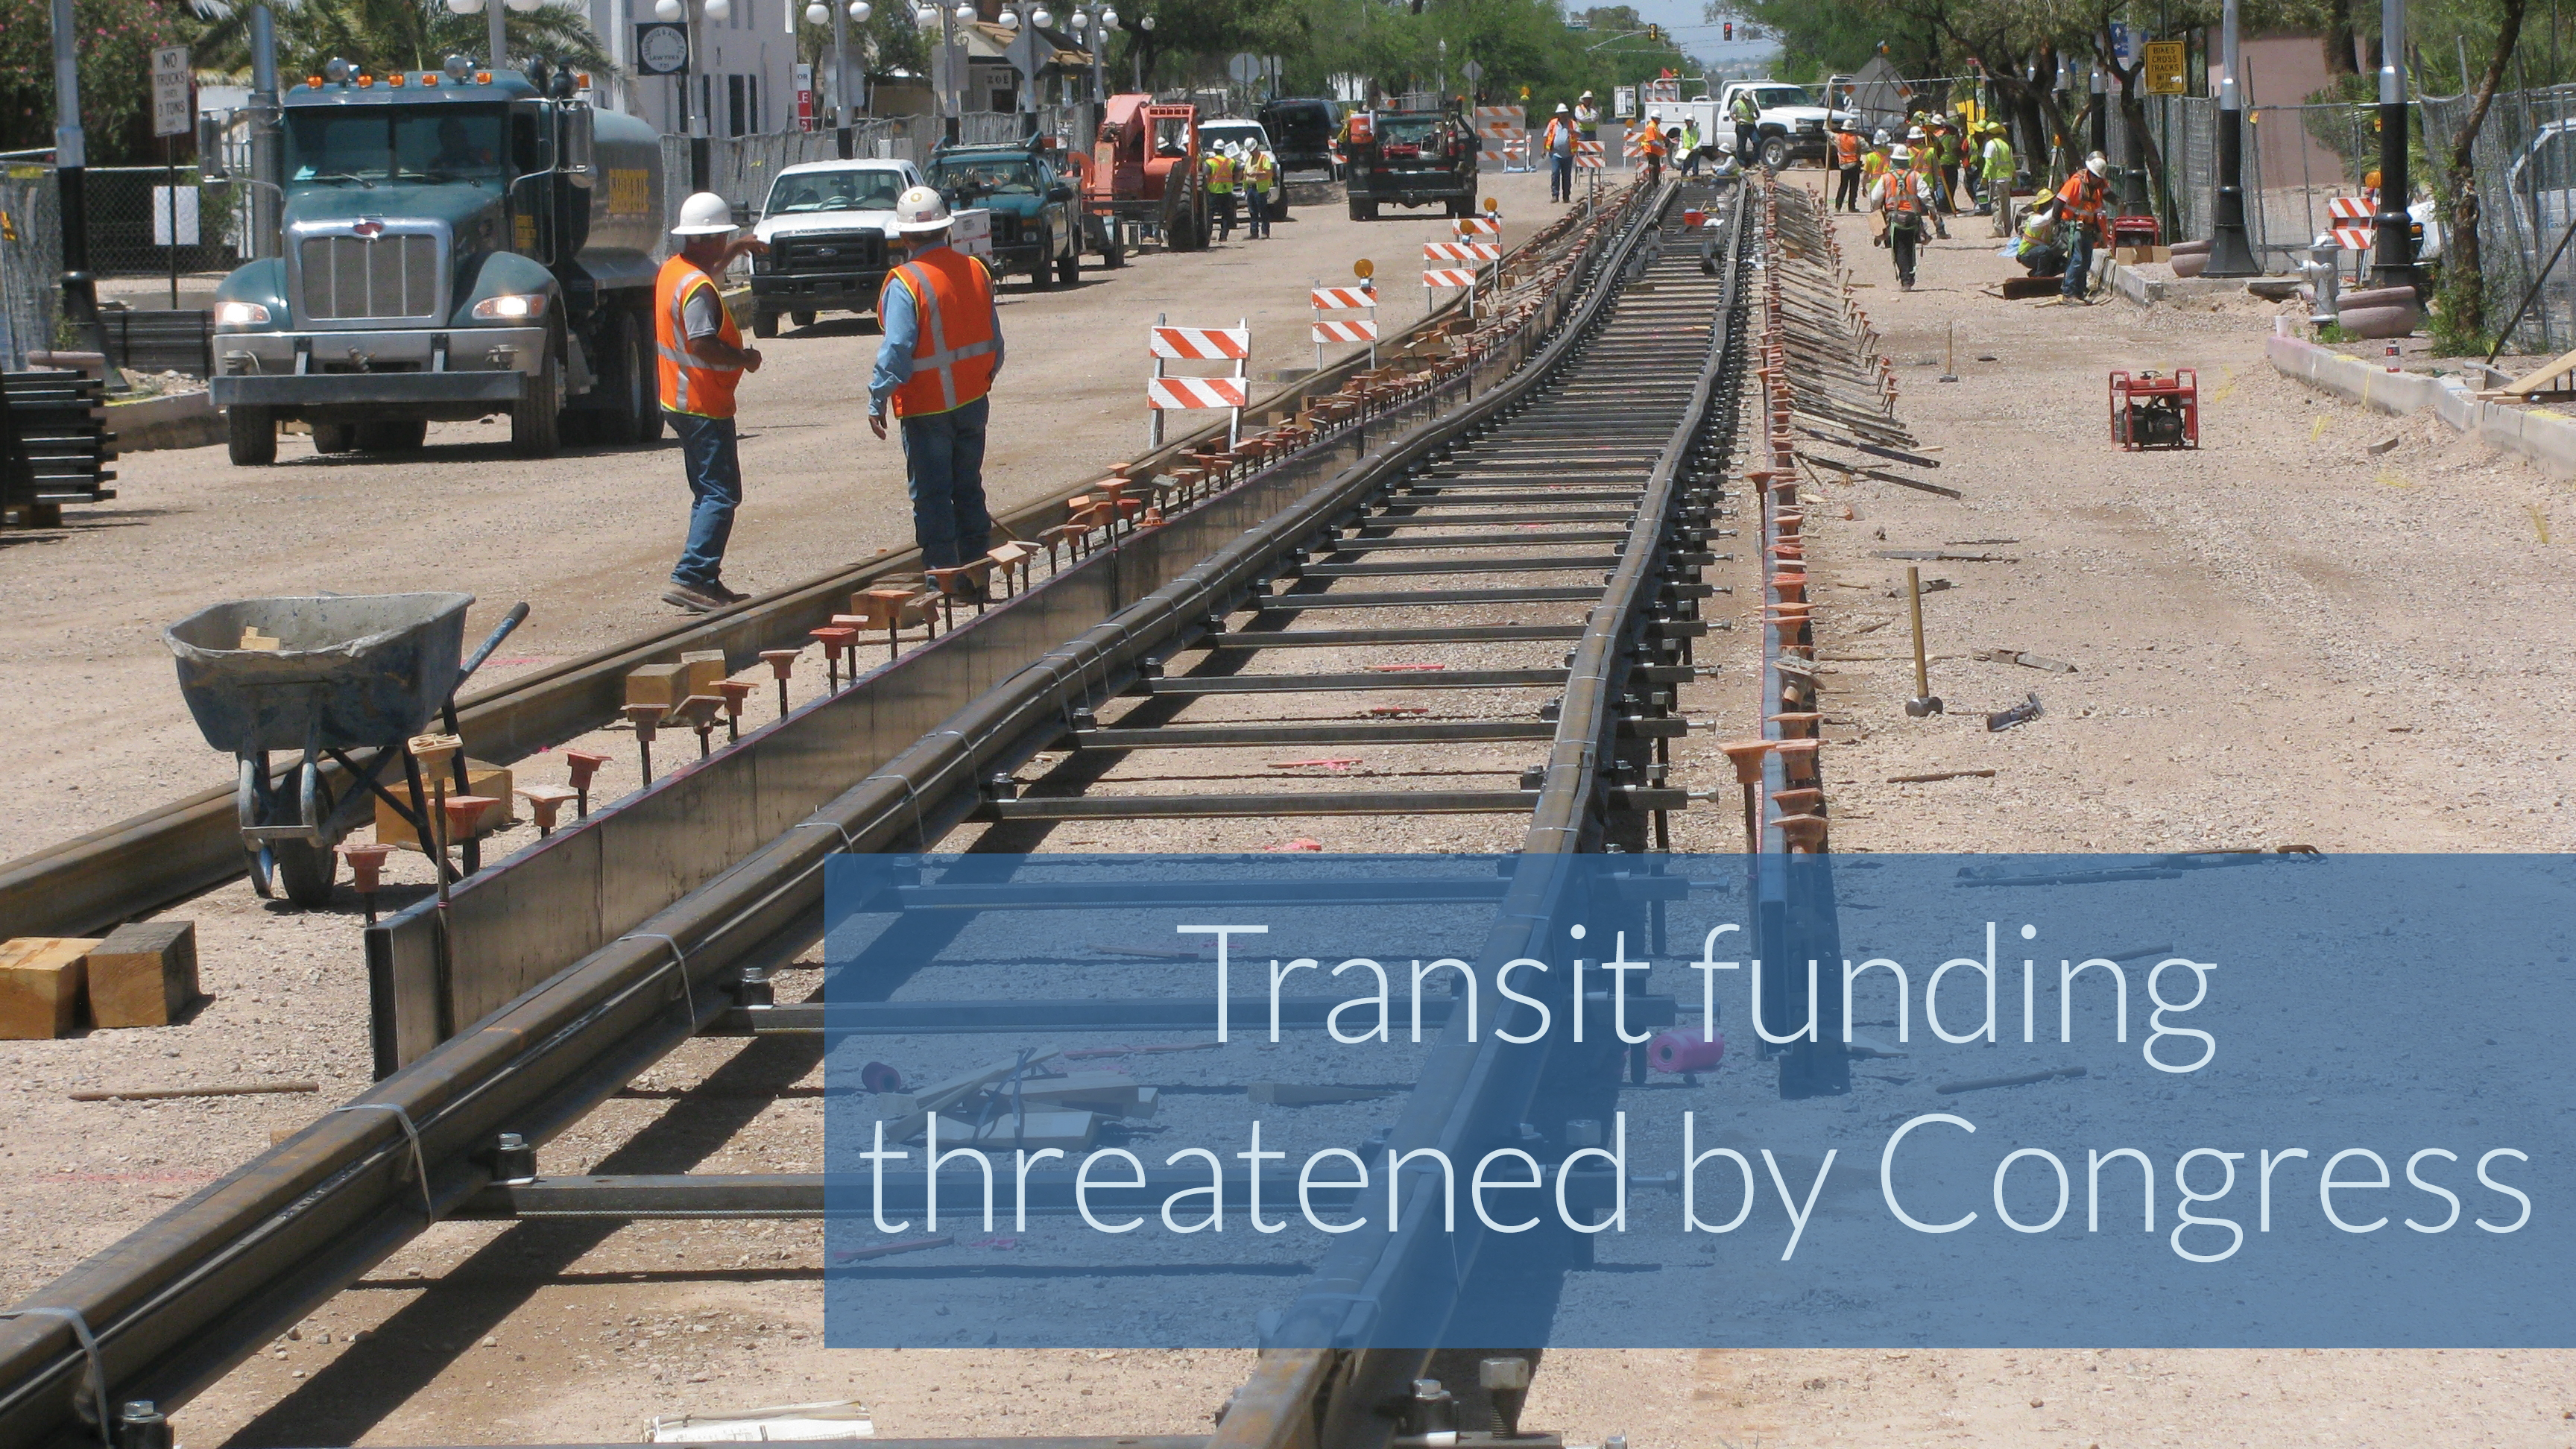 Federal transit funding threatened